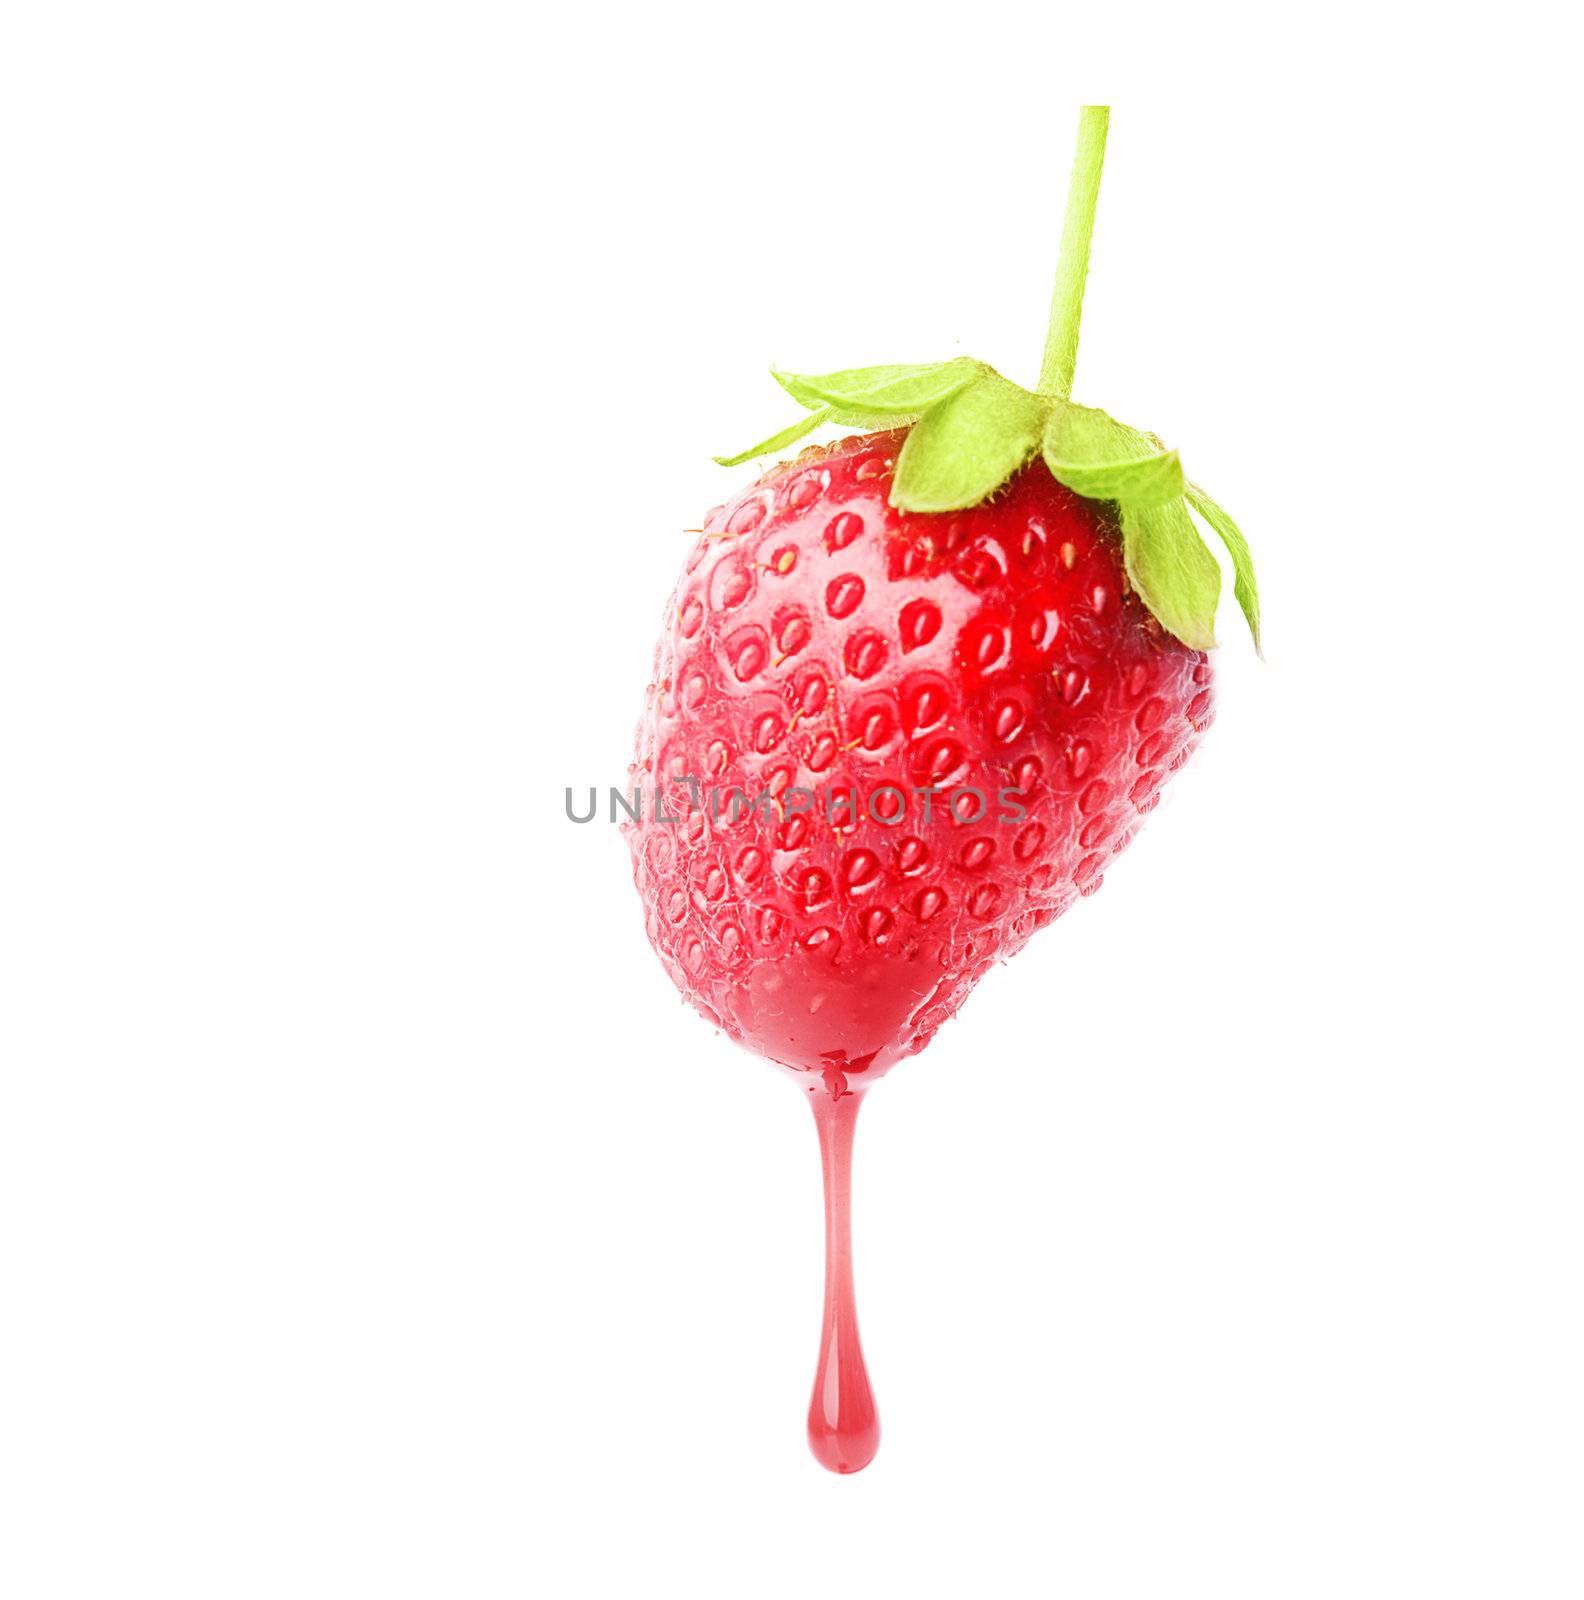 Strawberry syrup by oksix